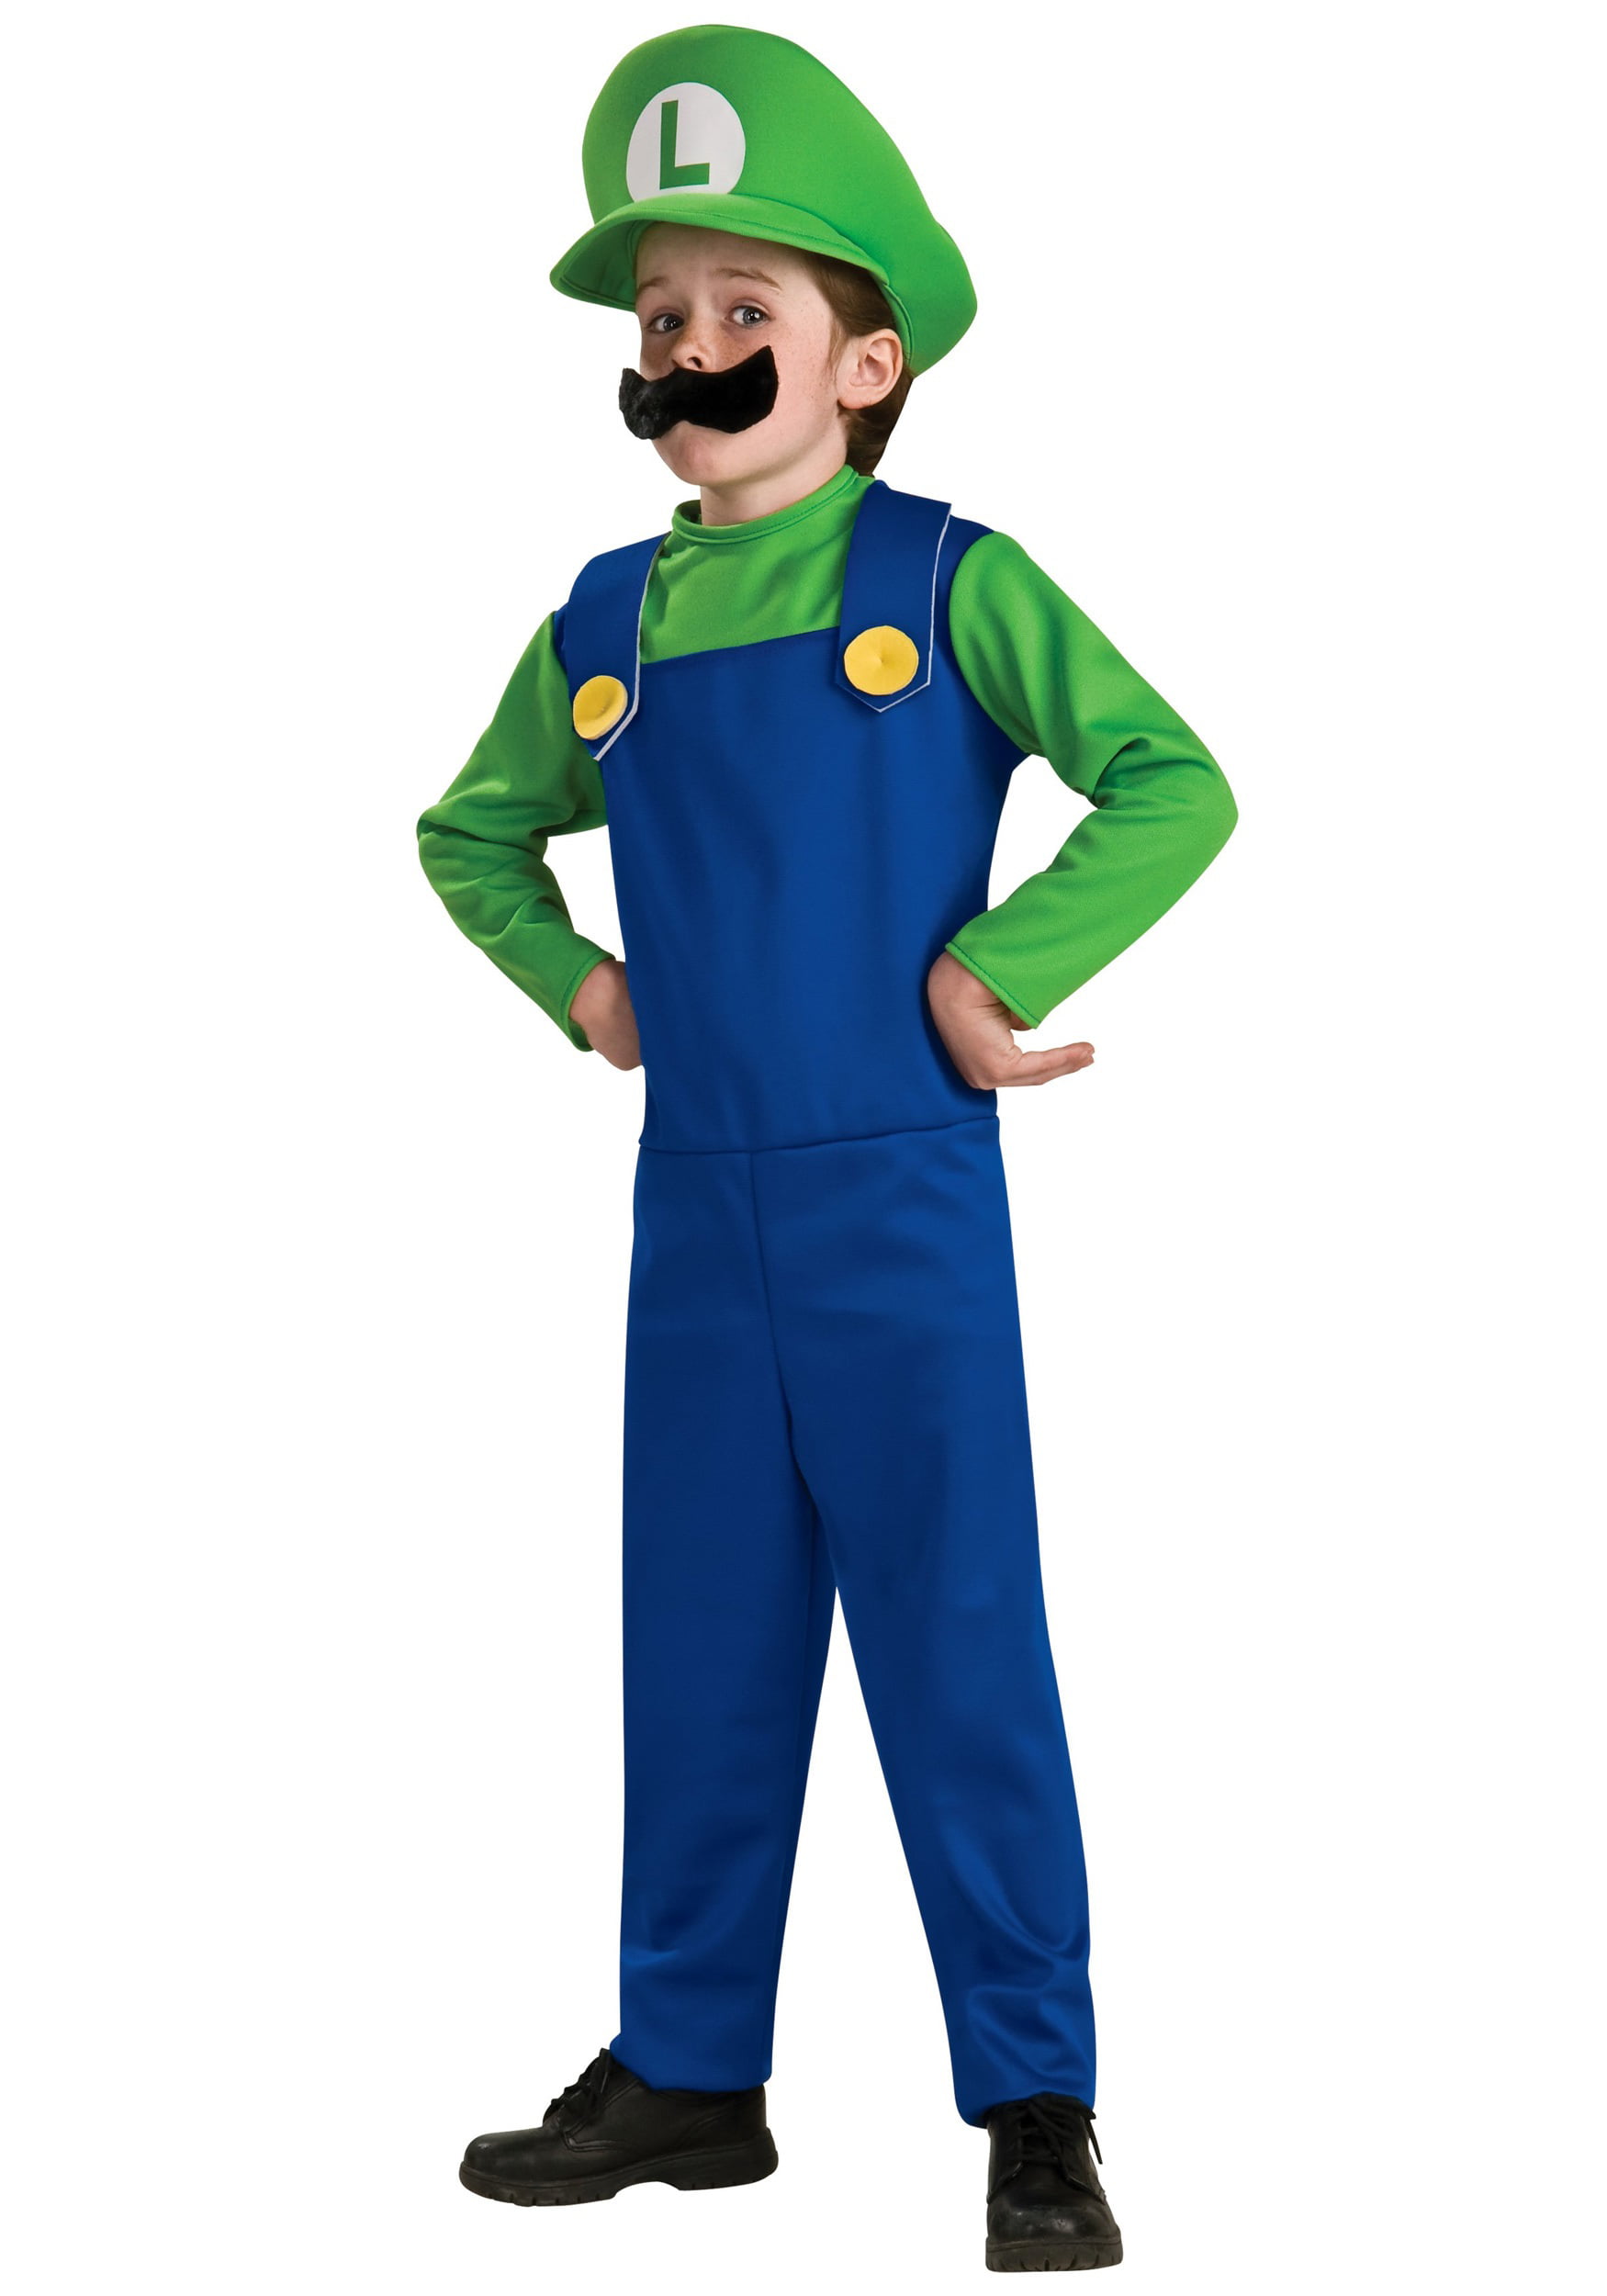 Buy Rubie's Luigi at Walmart.com.